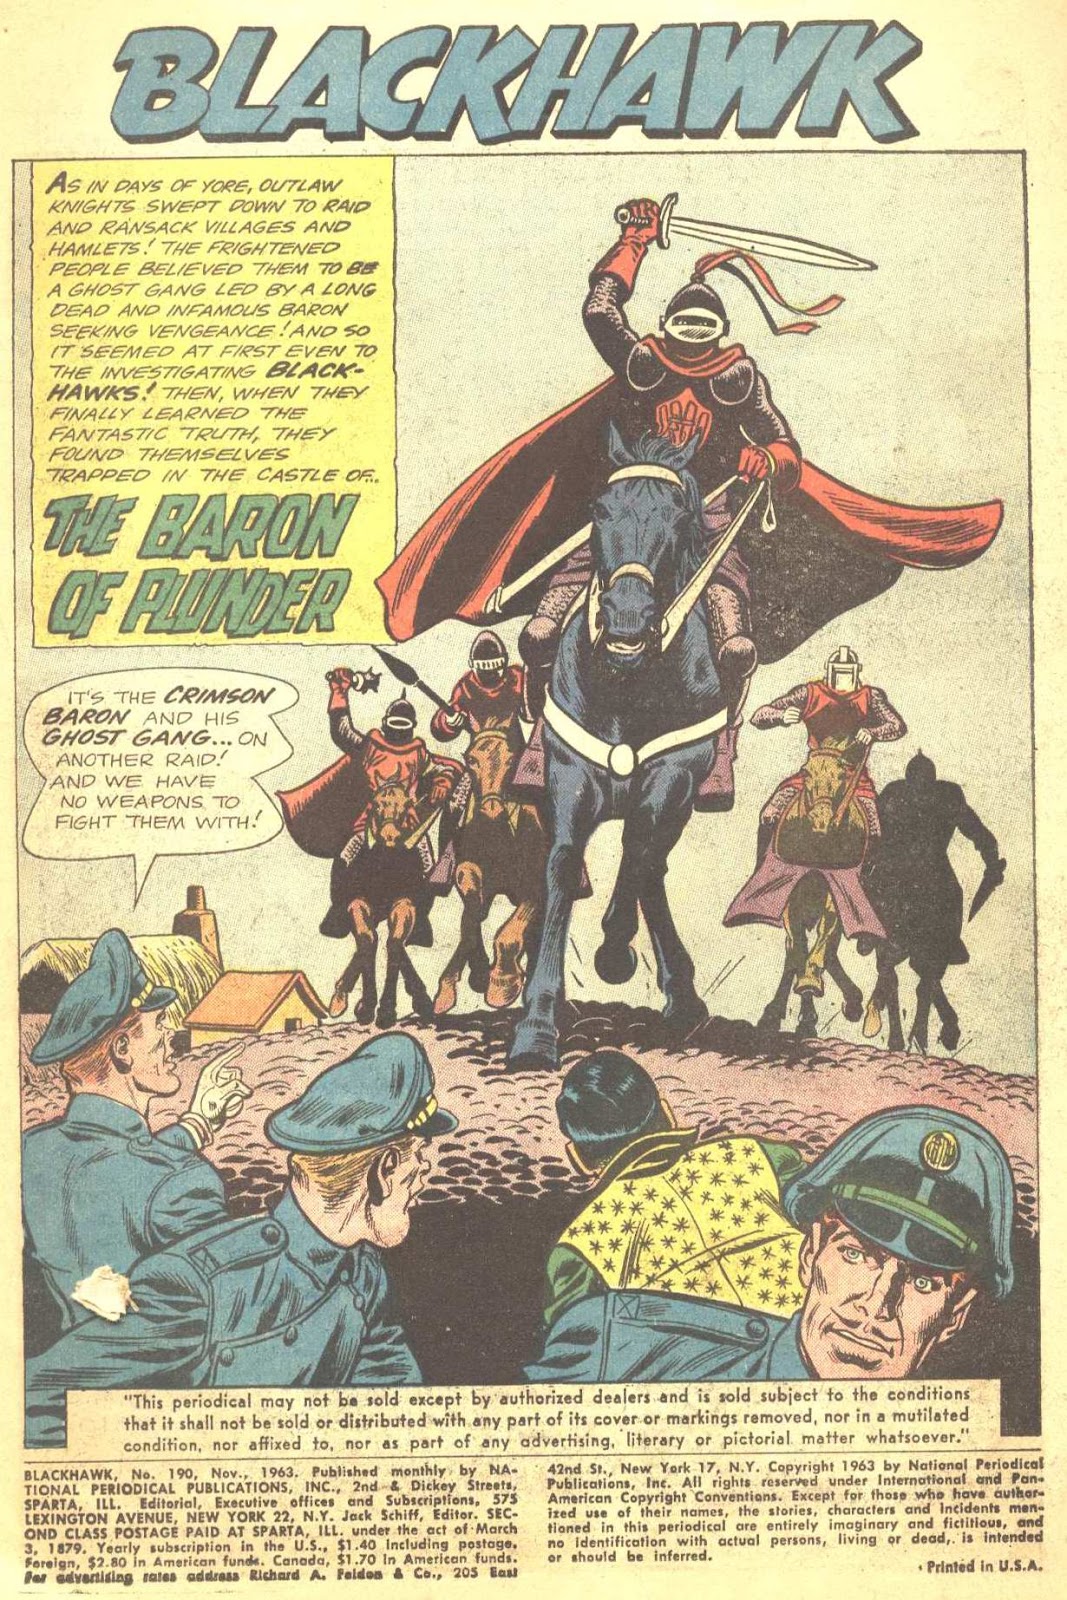 DC 1963 Silver Age issue. Blackhawk #190 